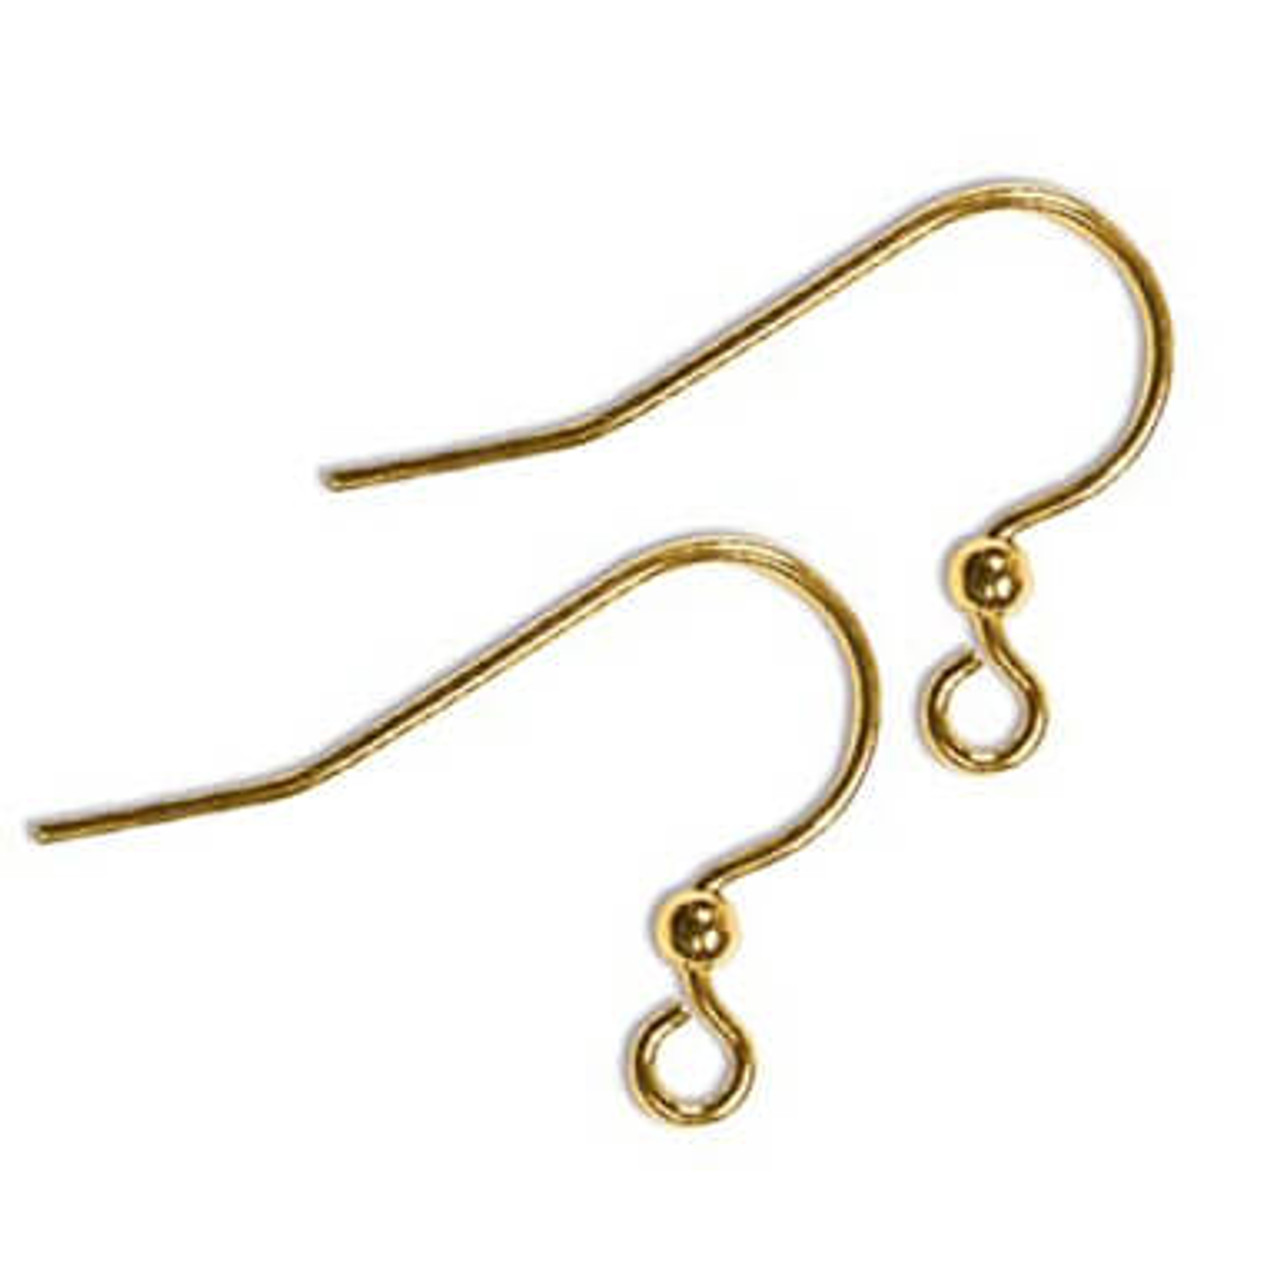 Gold Plated Over Brass Fish Hooks Earring Hooks Ear Wires Fishhook